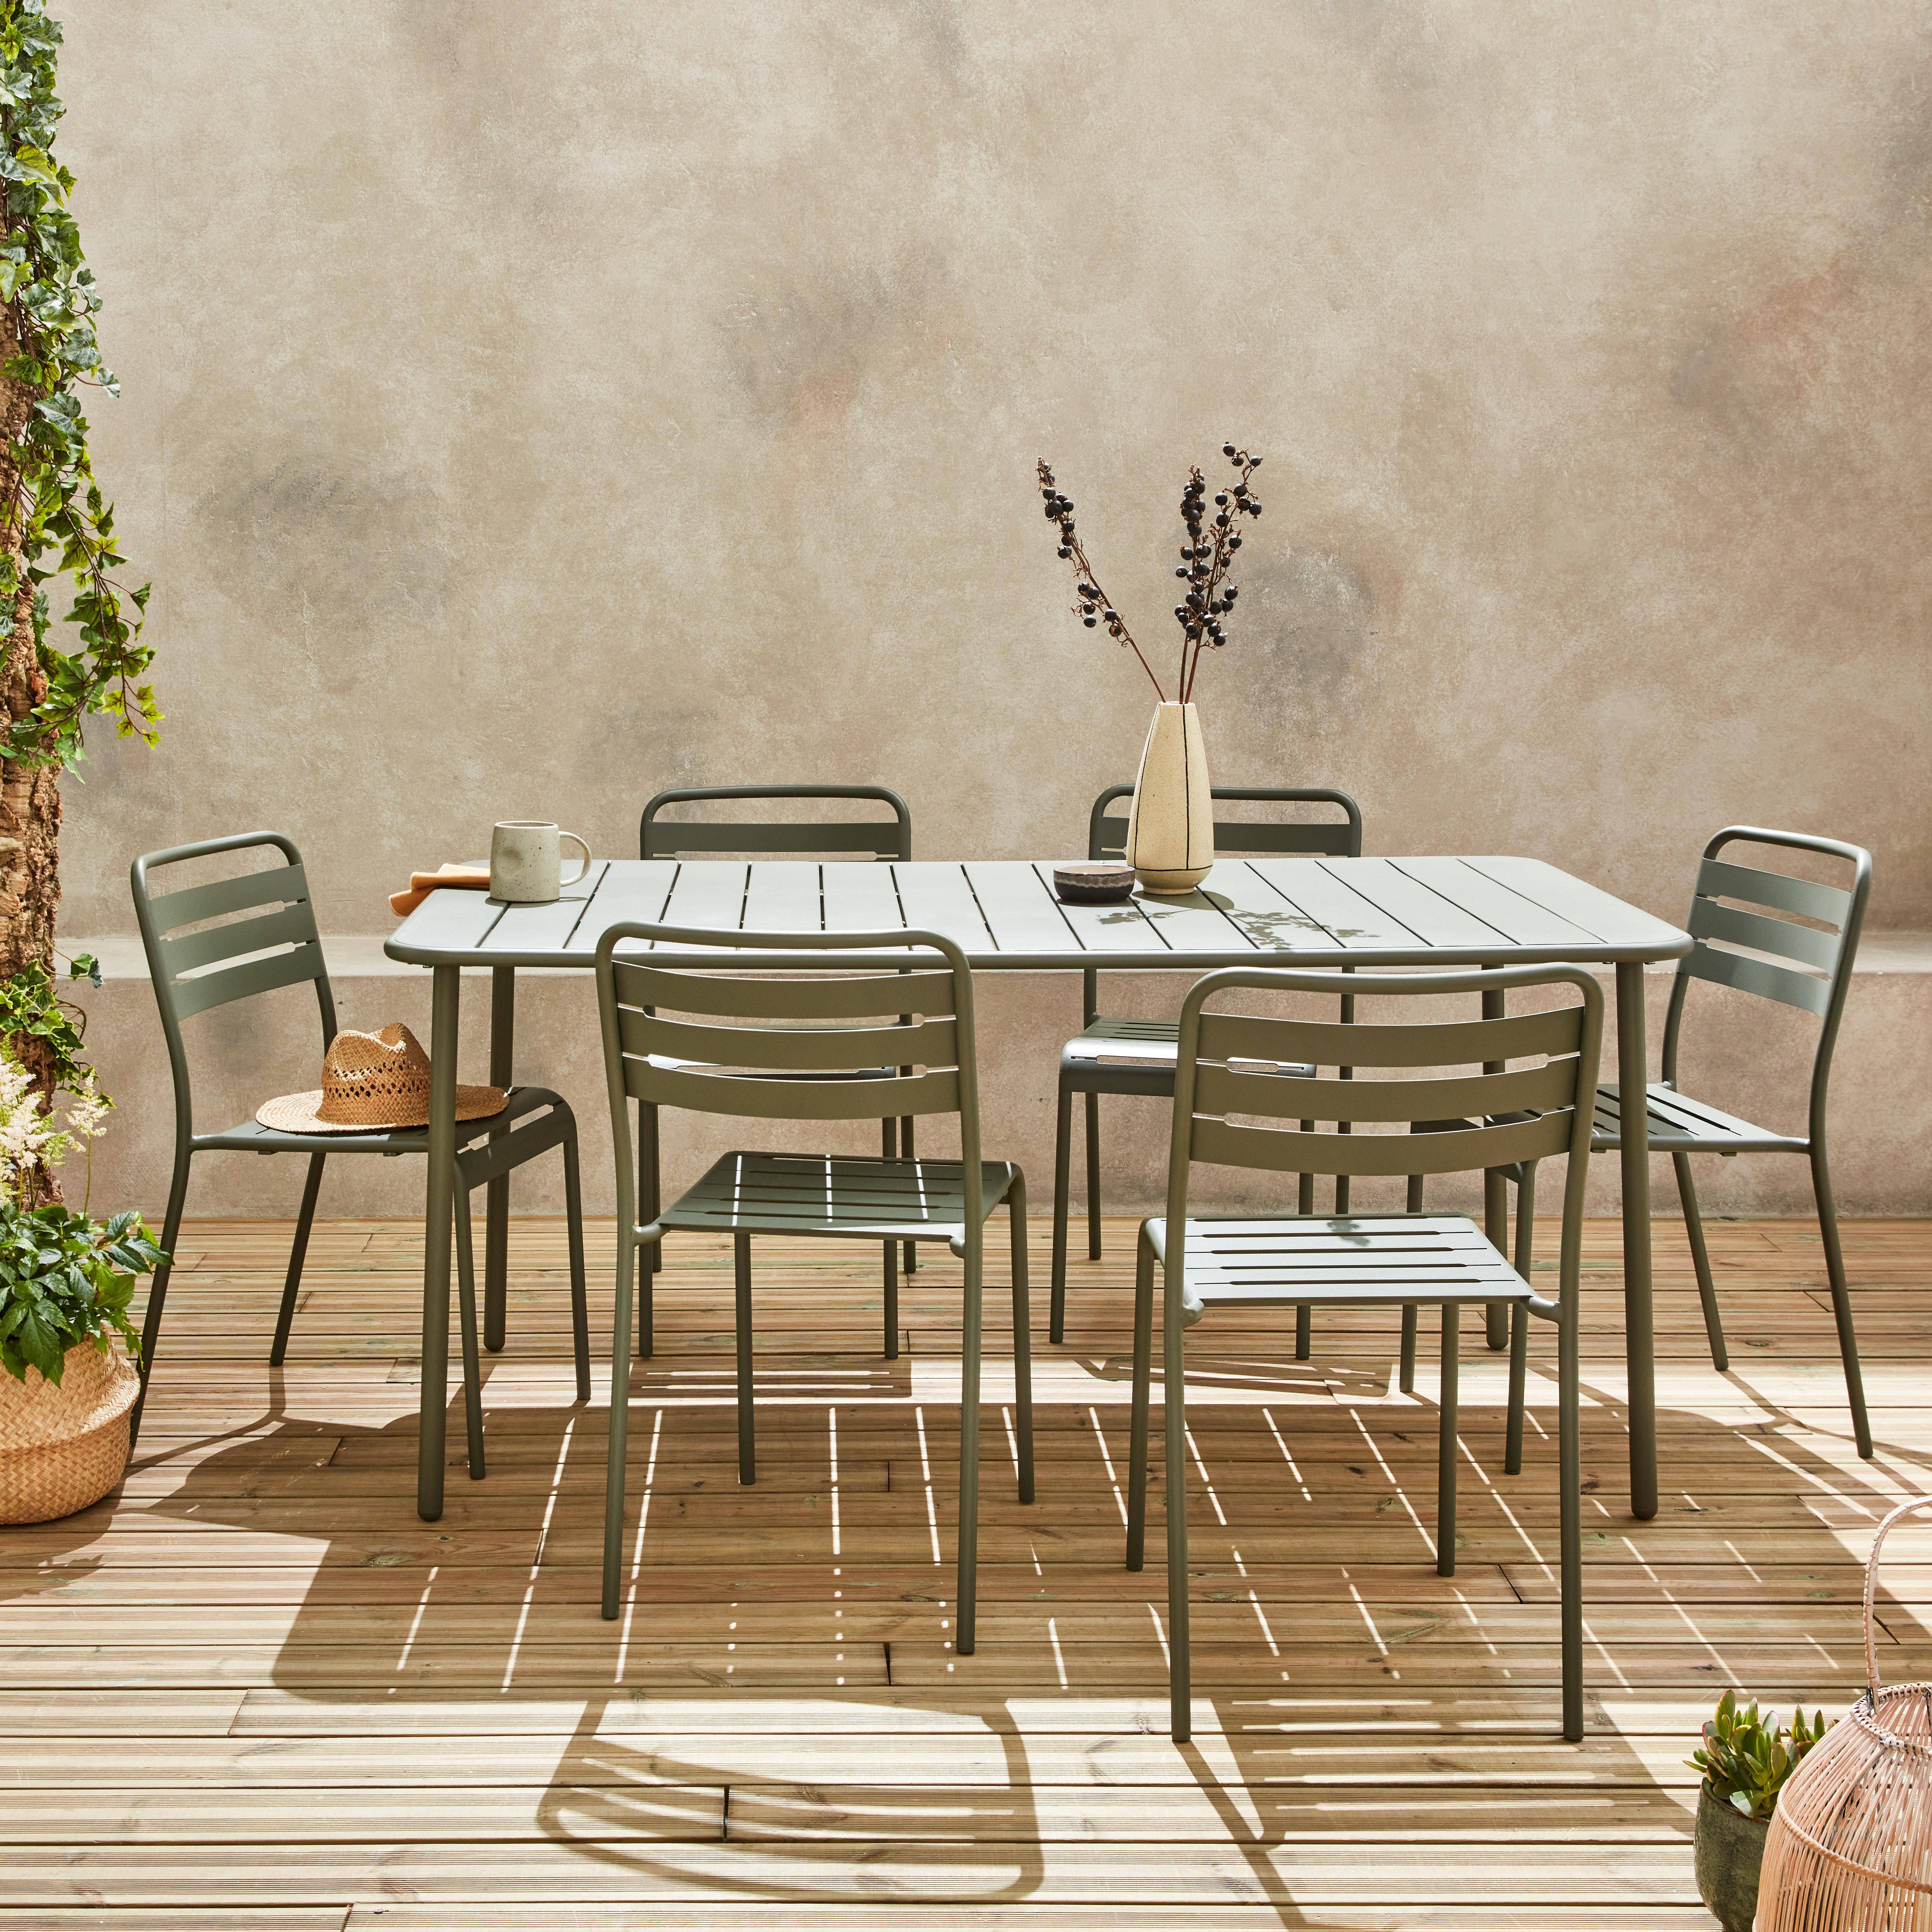 6-8 seater rectangular steel garden table set with chairs, 160cm, khaki green,sweeek,Photo2